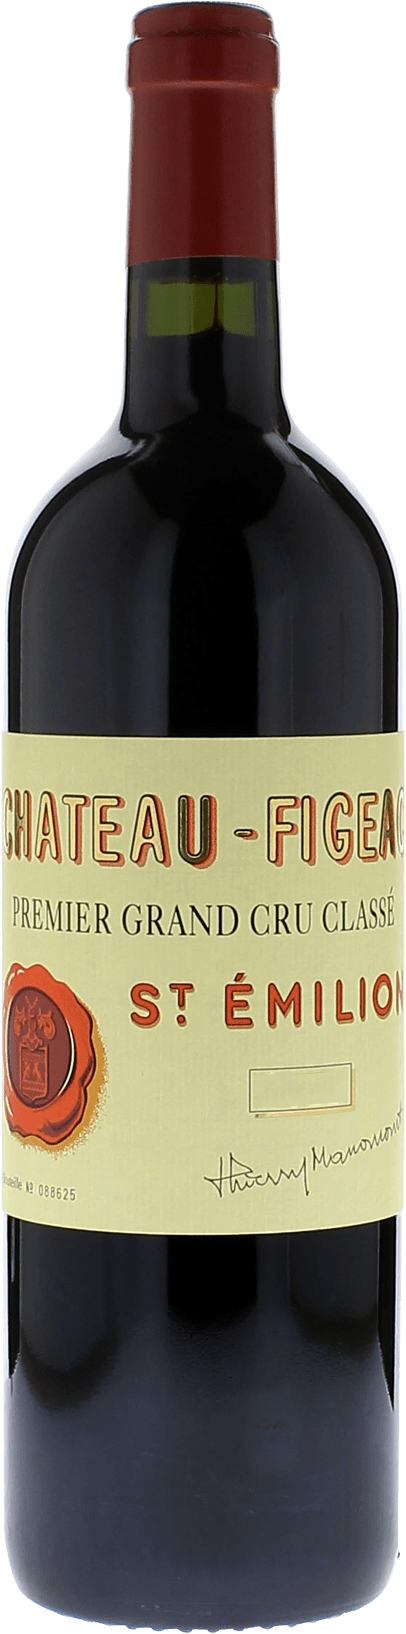 Figeac 2014 1er Grand cru B class Saint-Emilion, Bordeaux rouge